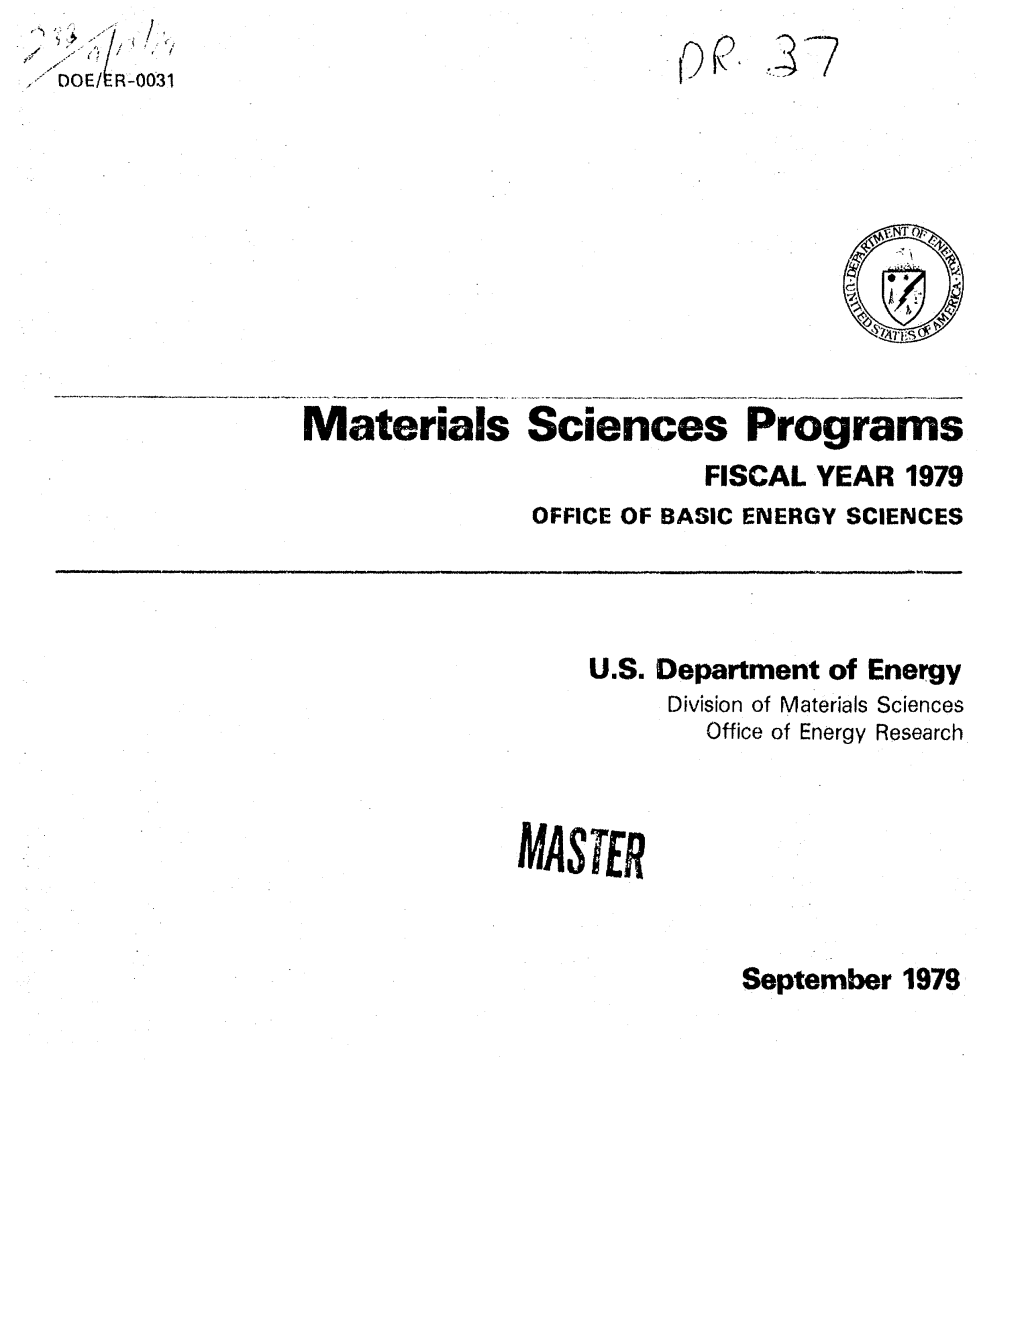 Materials Sciences Programs MASTER